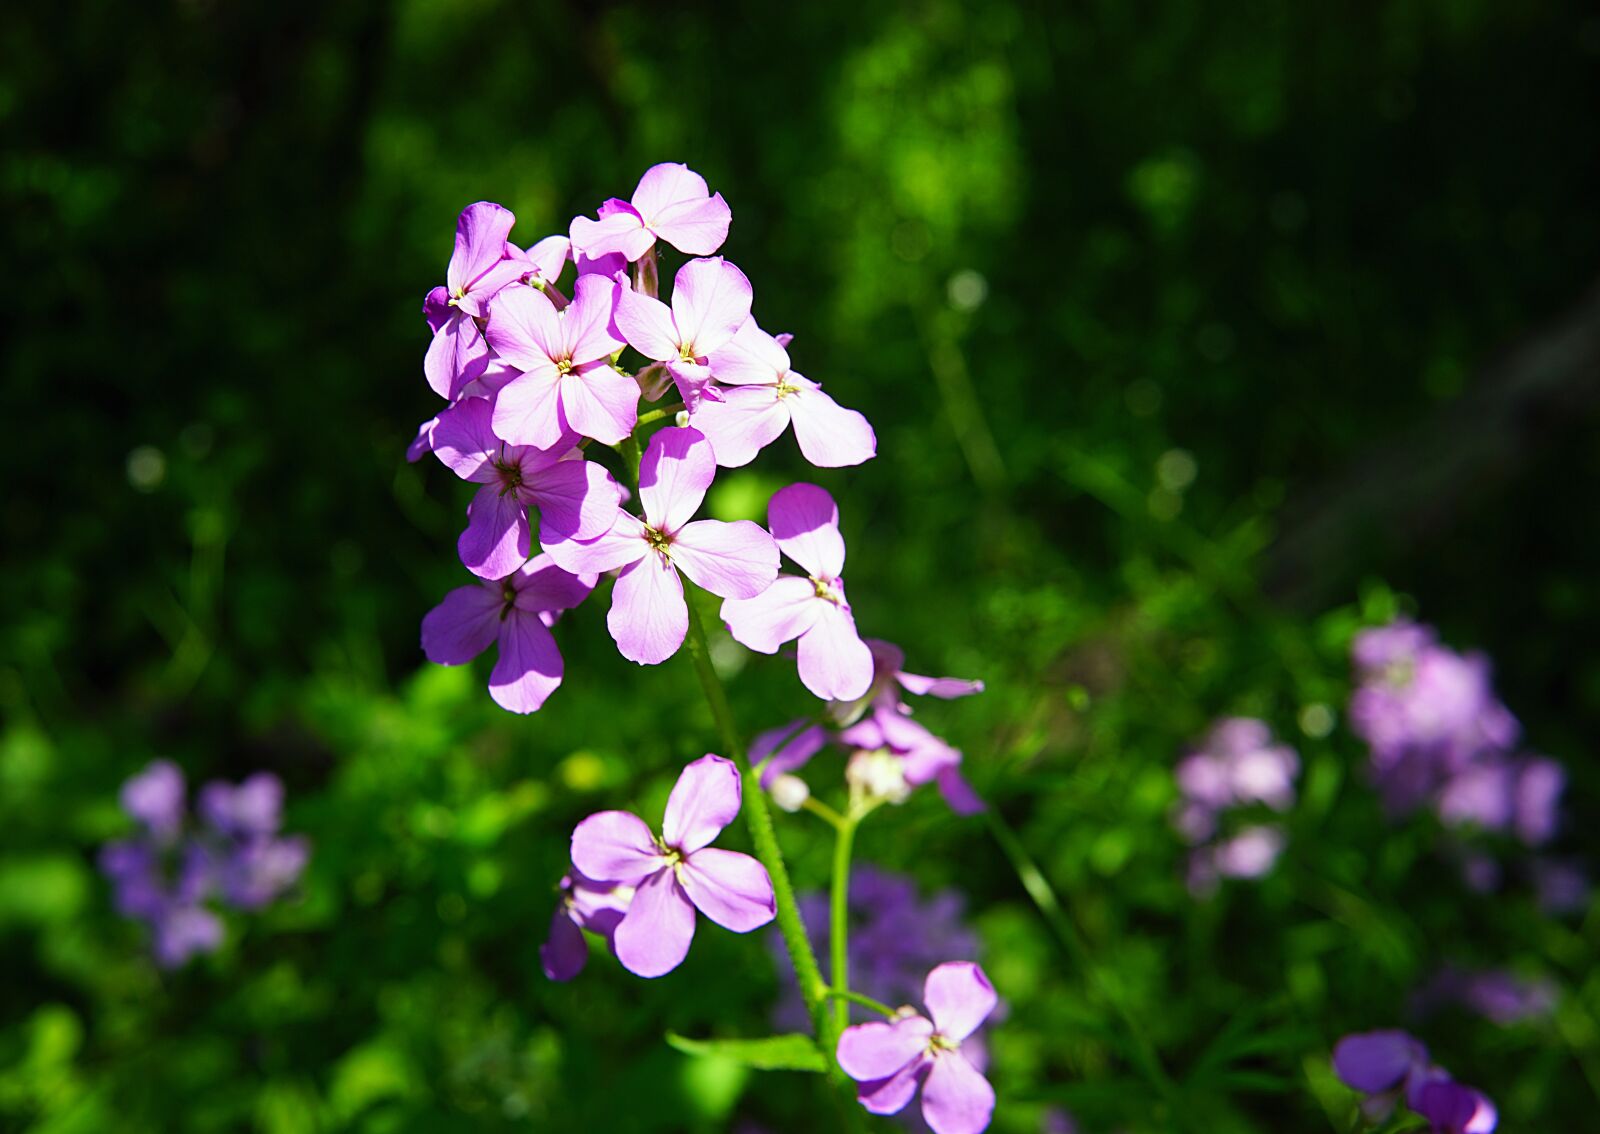 Samyang AF 45mm F1.8 FE sample photo. Wildflower, purple, spring photography